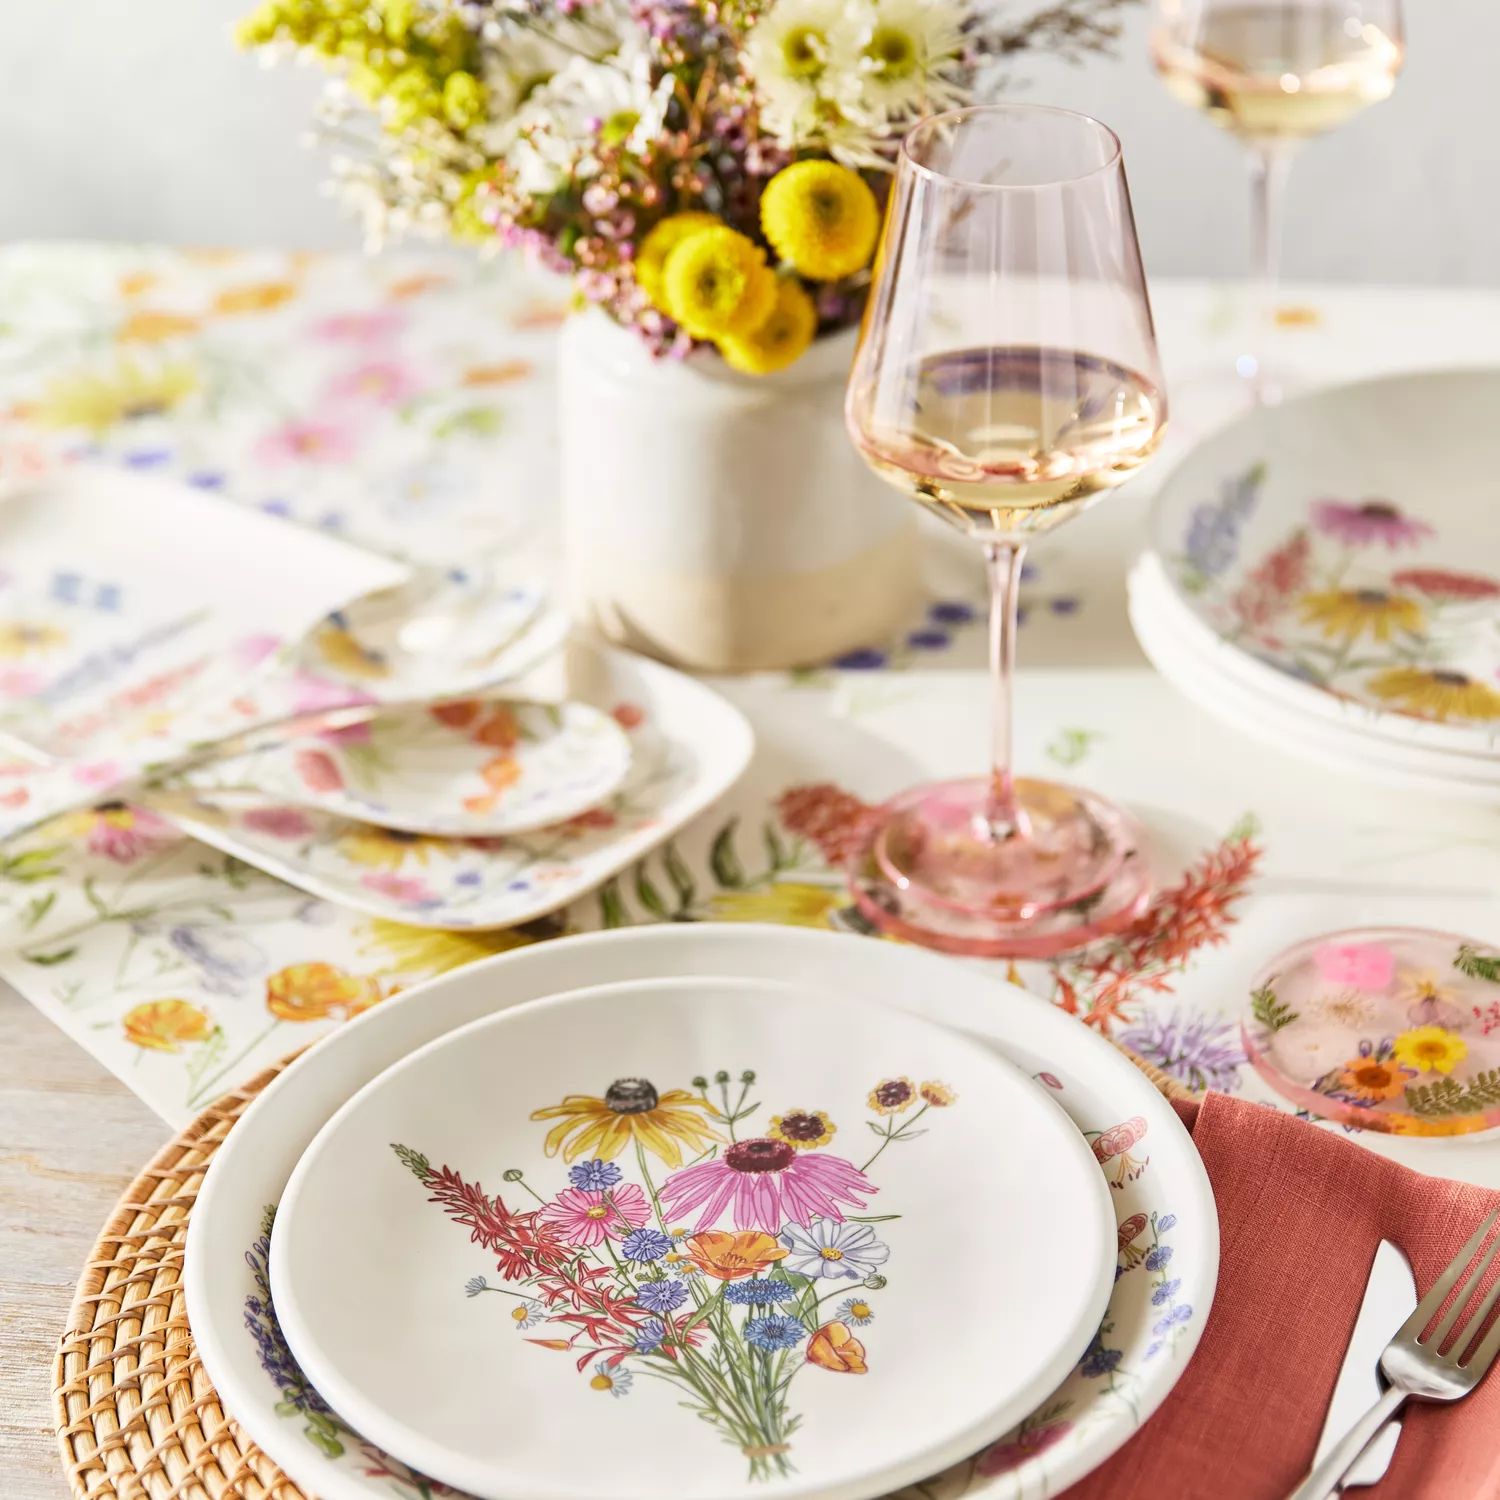 Sur La Table Wildflower Melamine Dinner Plate | Sur La Table | Sur La Table